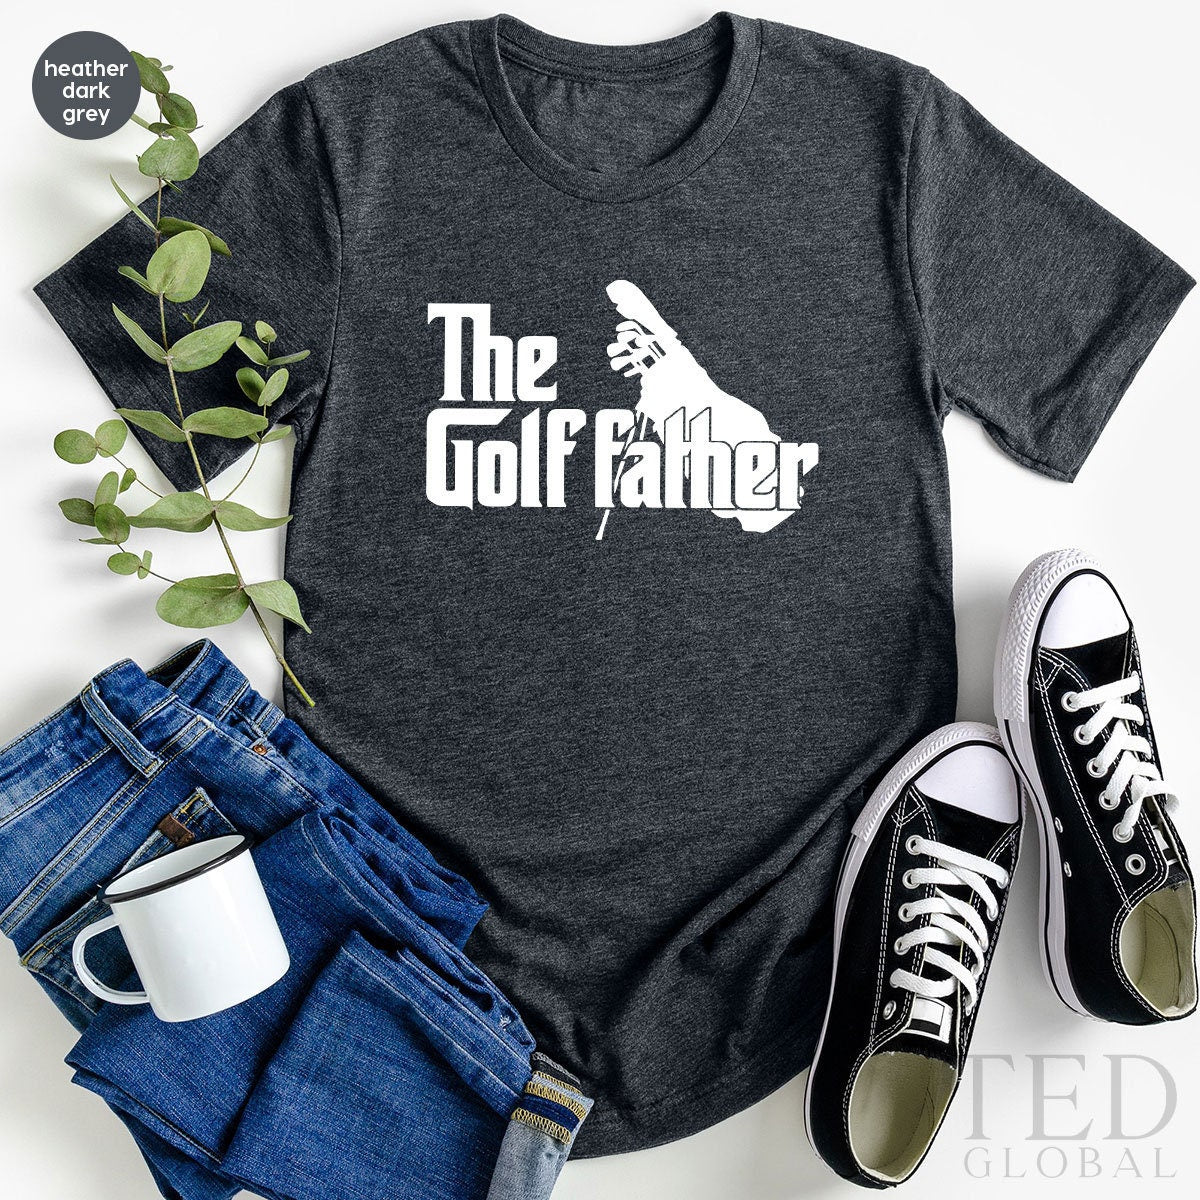 The Golf Father Shirt, Funny Golf Shirt, Golf Dad Tshirt, Fathers Day T Shirt, Golf Lover Gift, Golfing Shirt for Men, Masters Shirt Golf